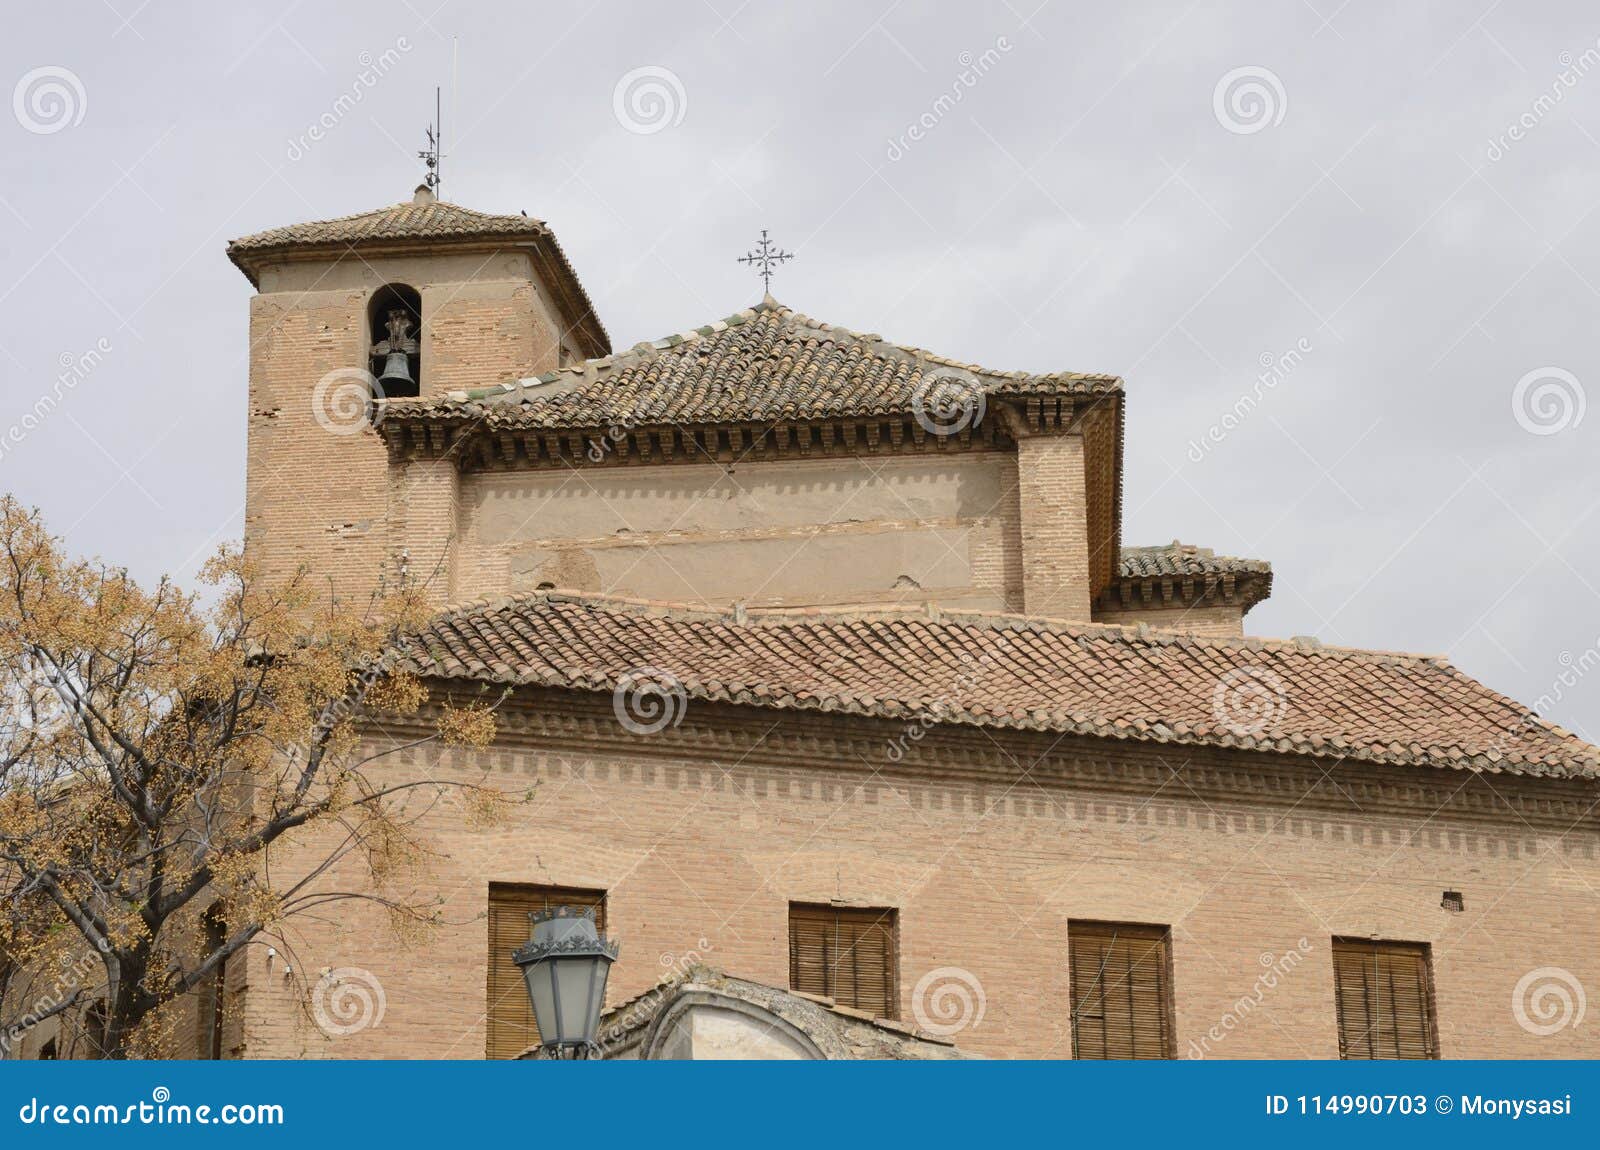 saint christopher church in granada